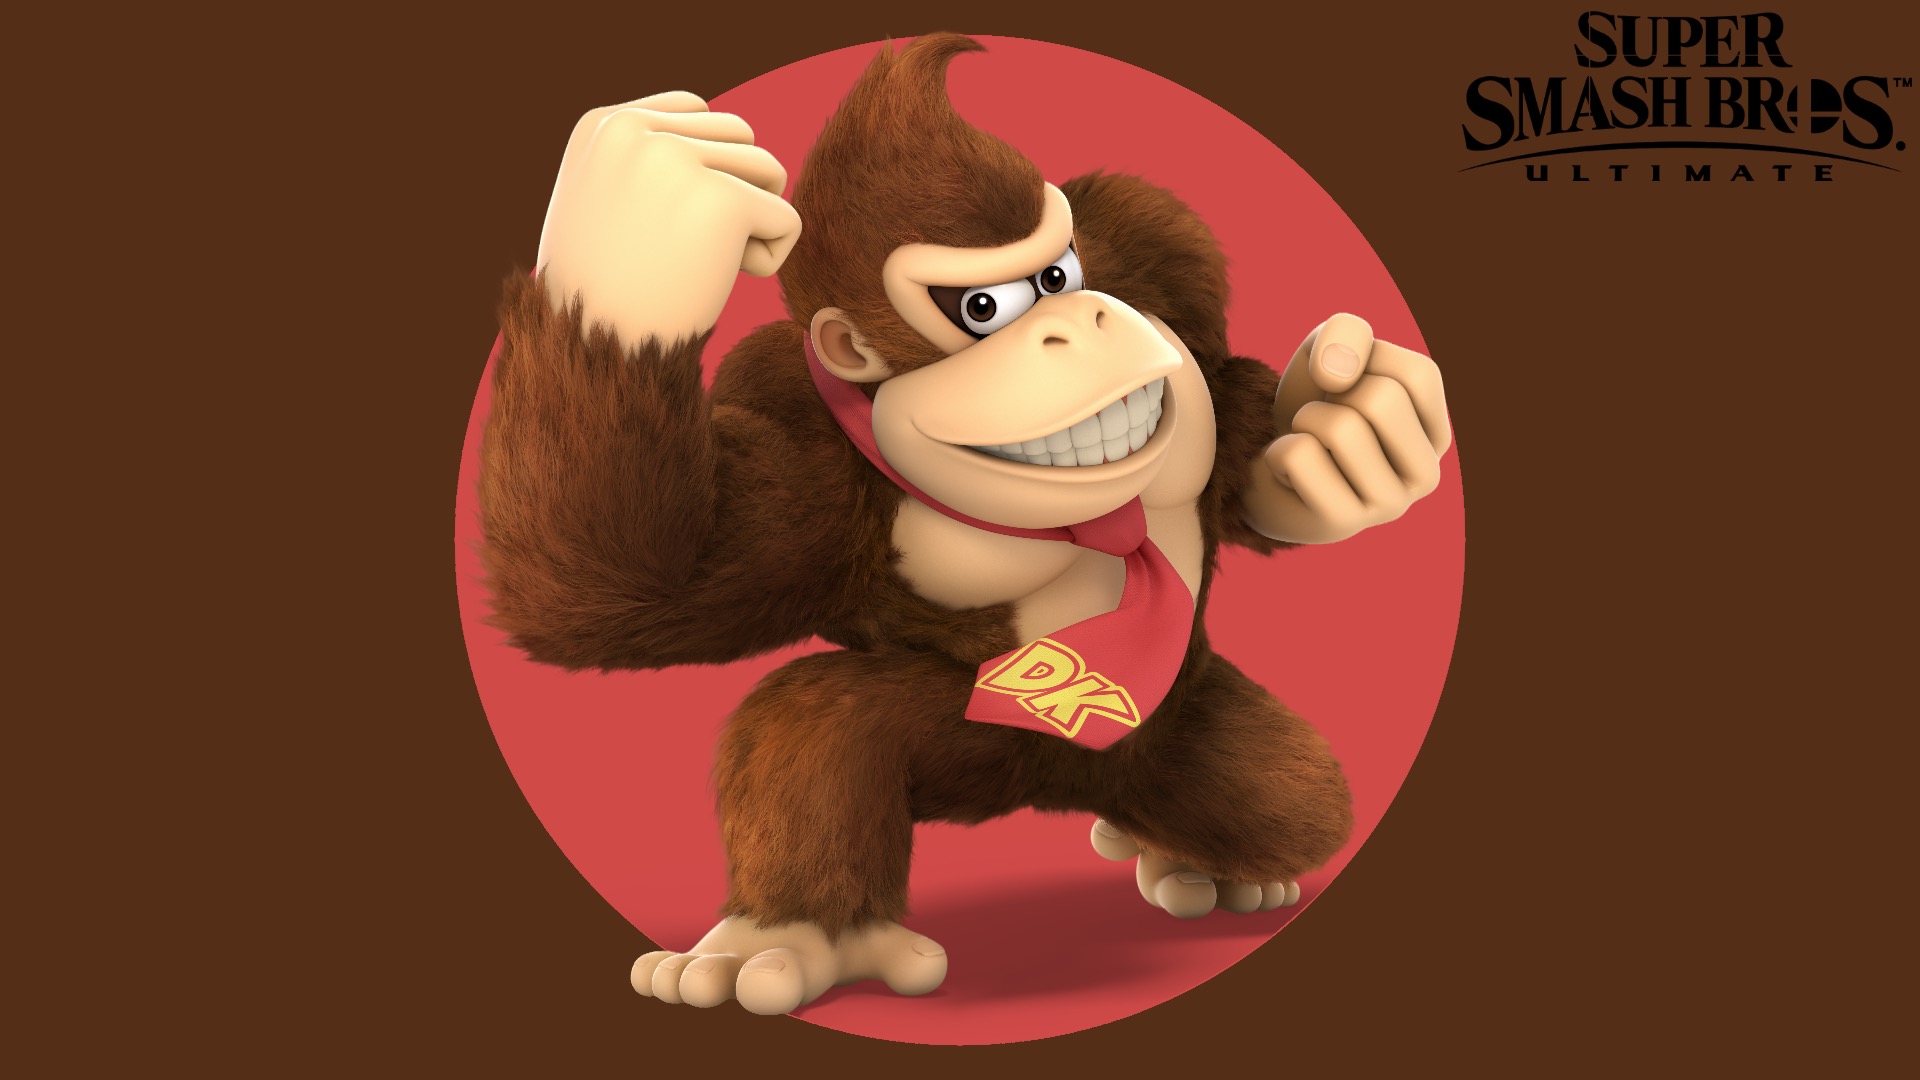 Descarga gratis la imagen Videojuego, Donkey Kong, Nintendô Ôru Sutâ Dairantô Sumasshu Burazâzu, Super Smash Bros Ultimate en el escritorio de tu PC